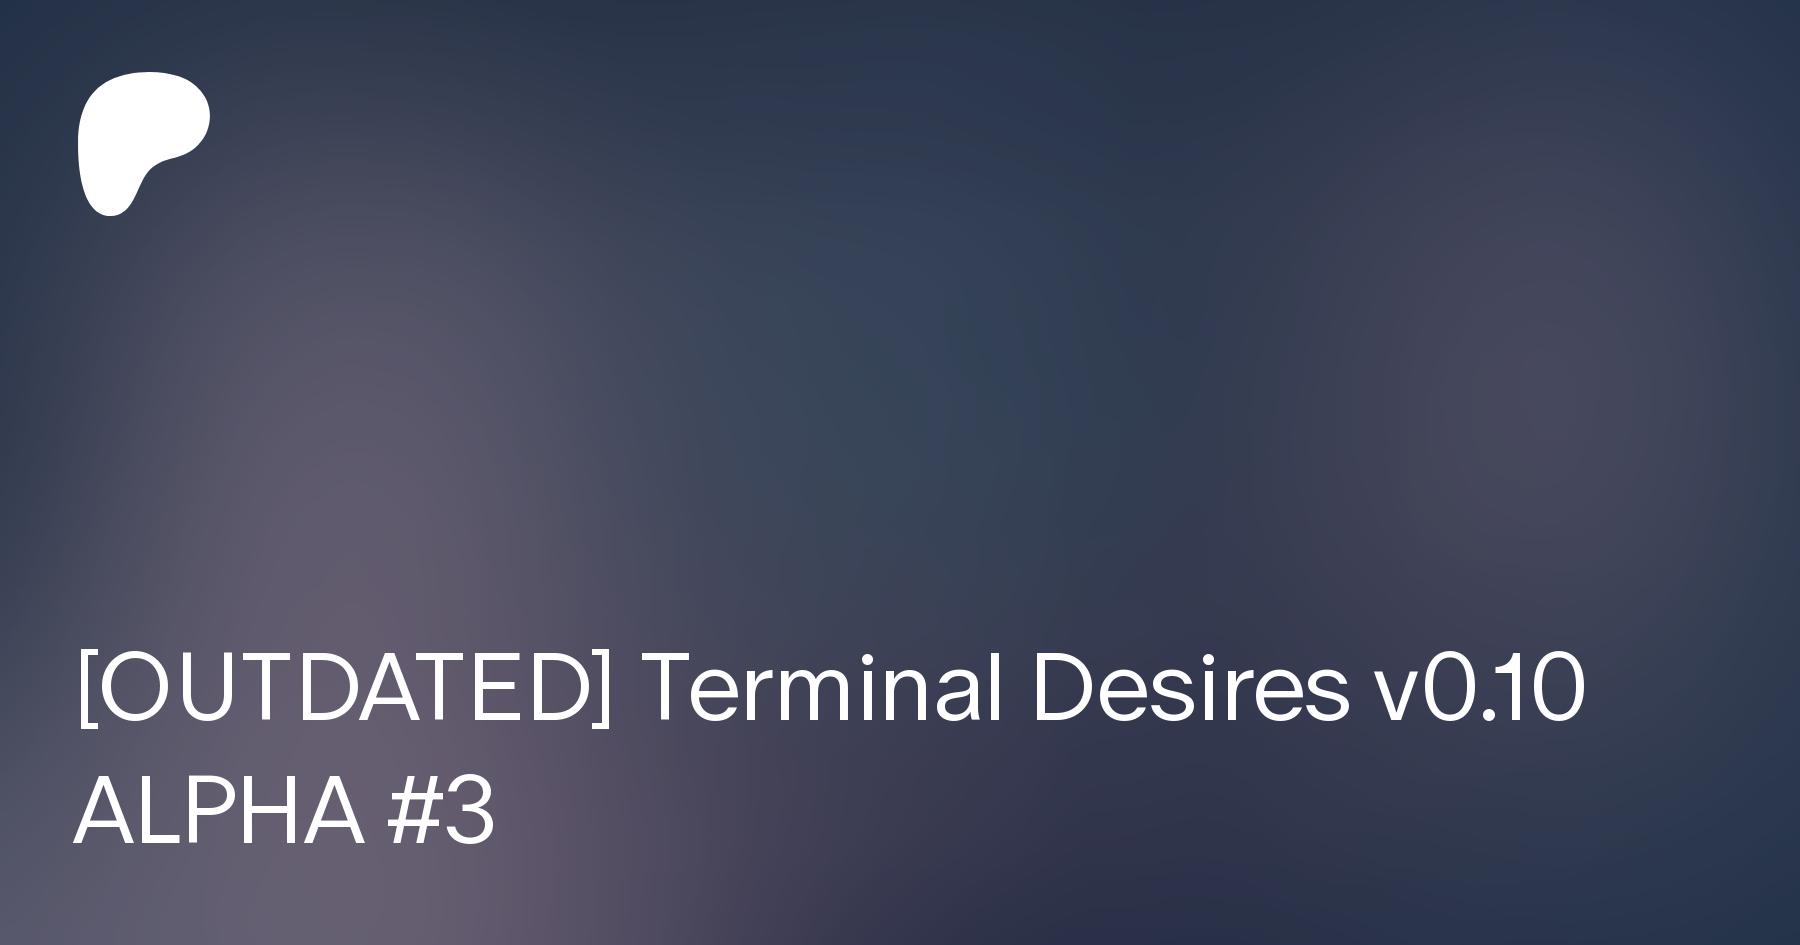 Terminal desires